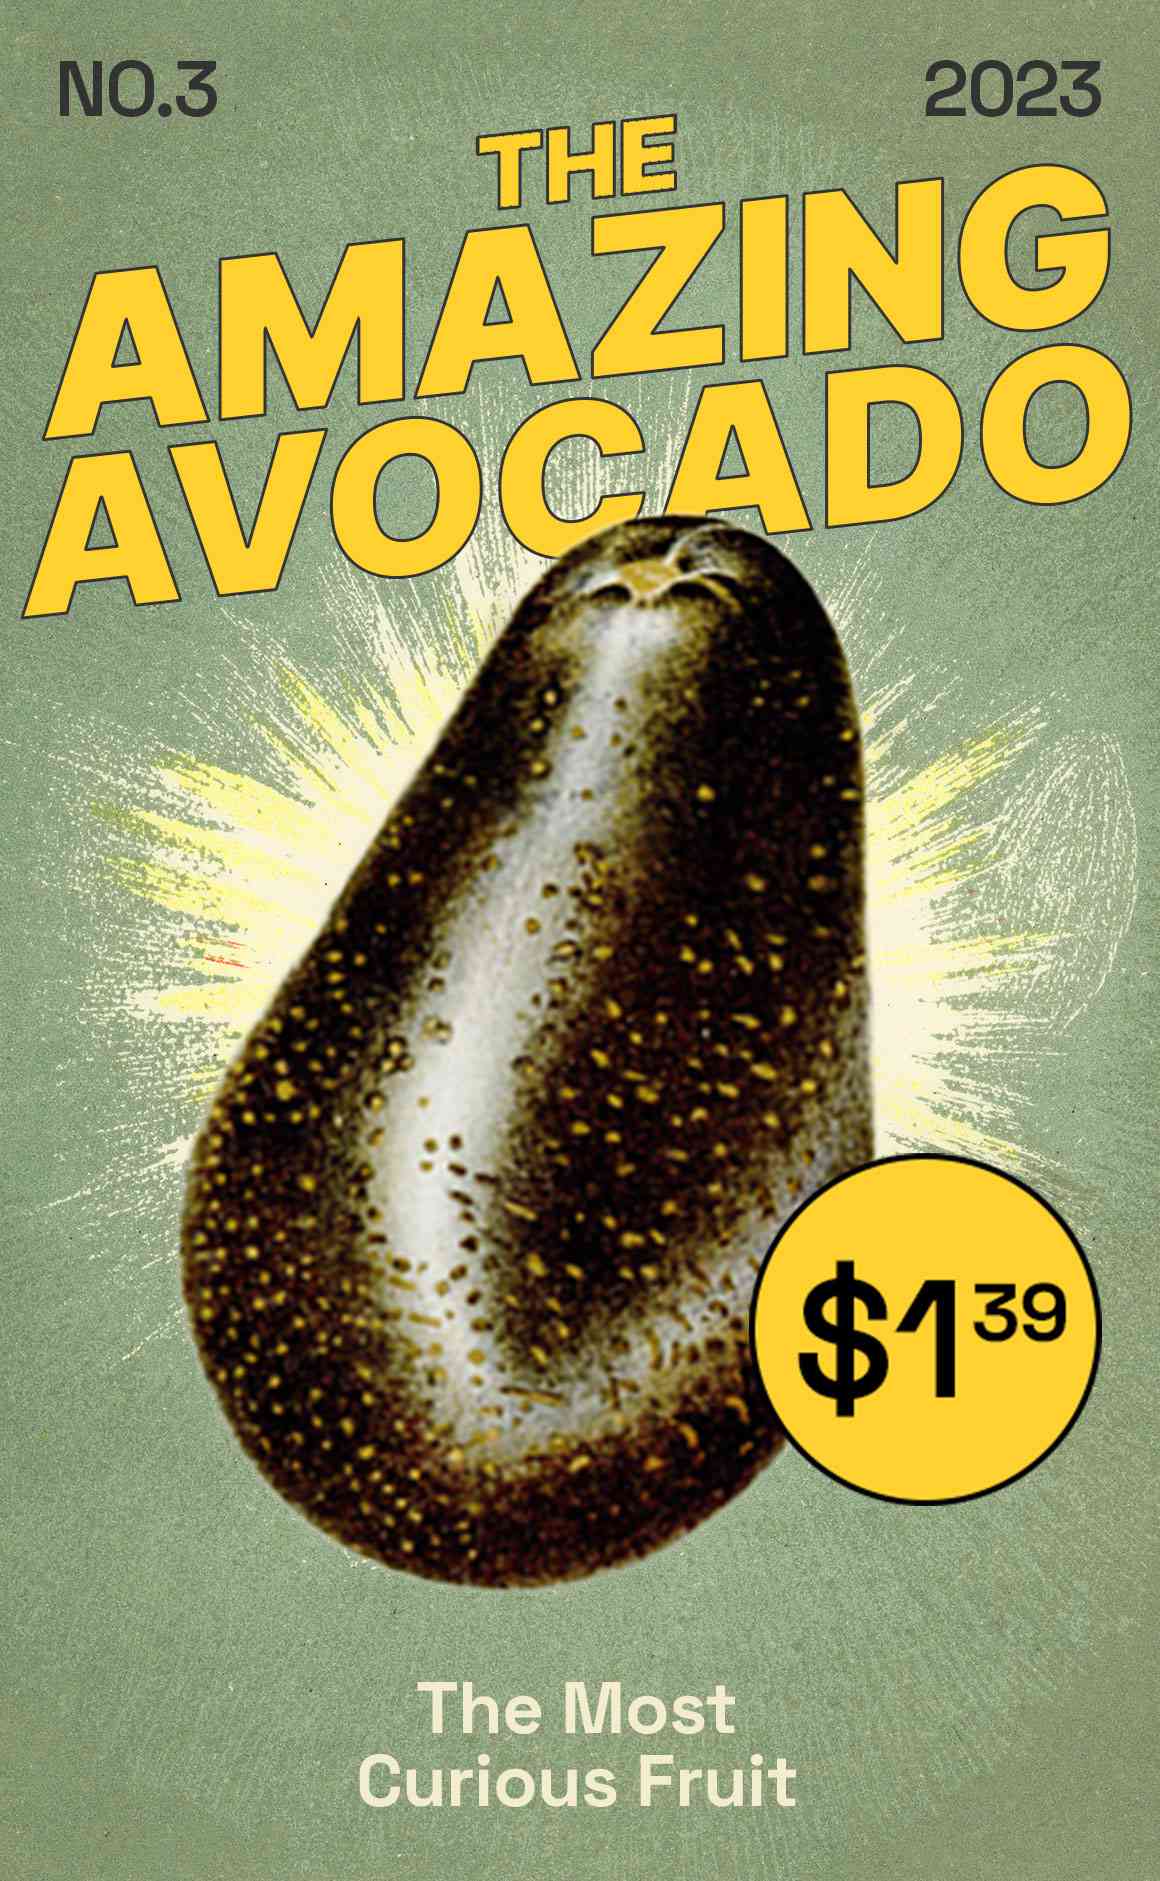 Pulp Ficiton cover of amazing avocado